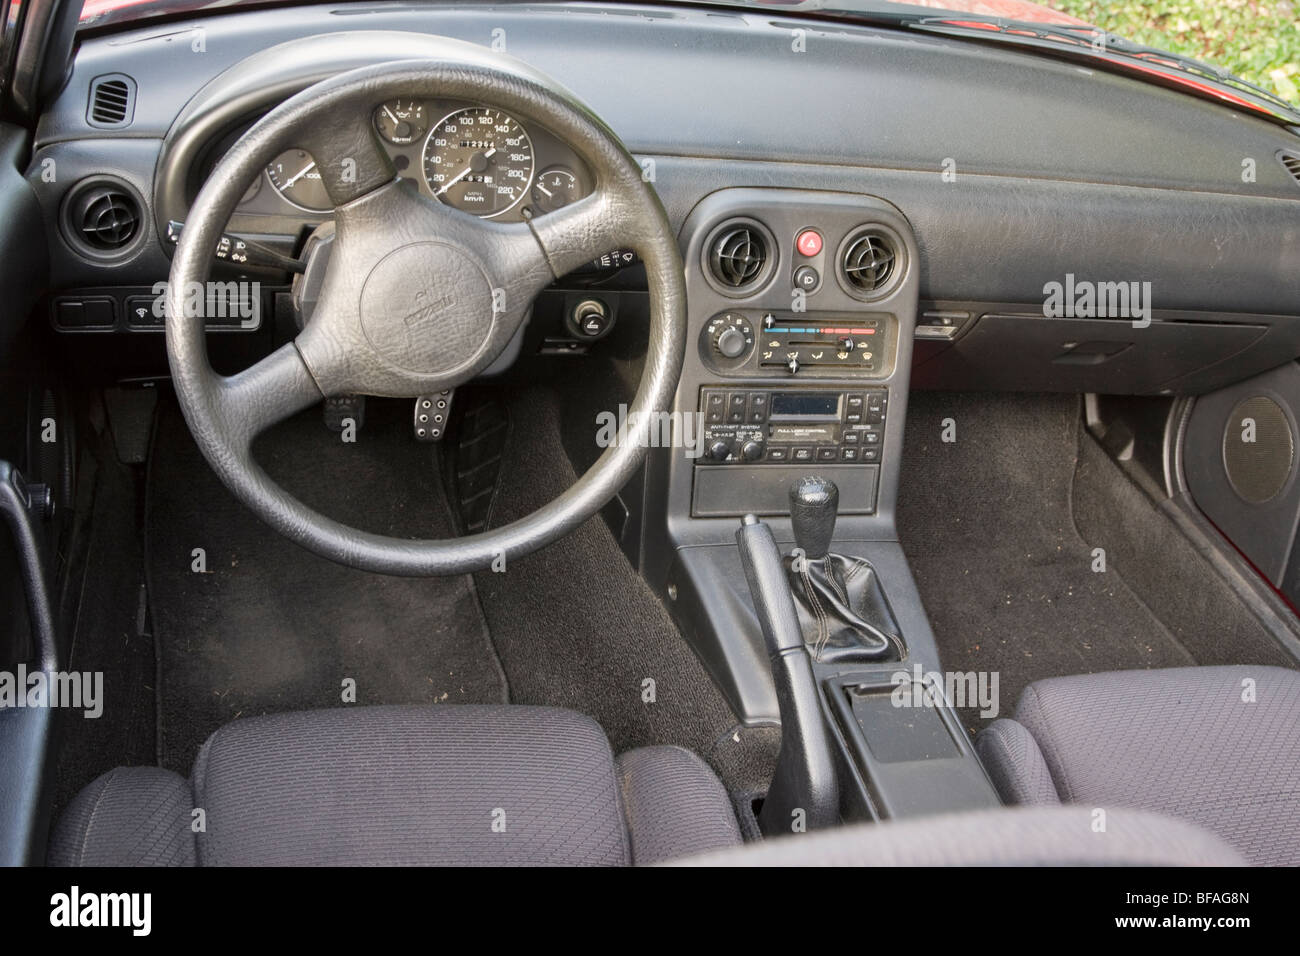 Mazda MX-5 Miata, interior Stock Photo - Alamy